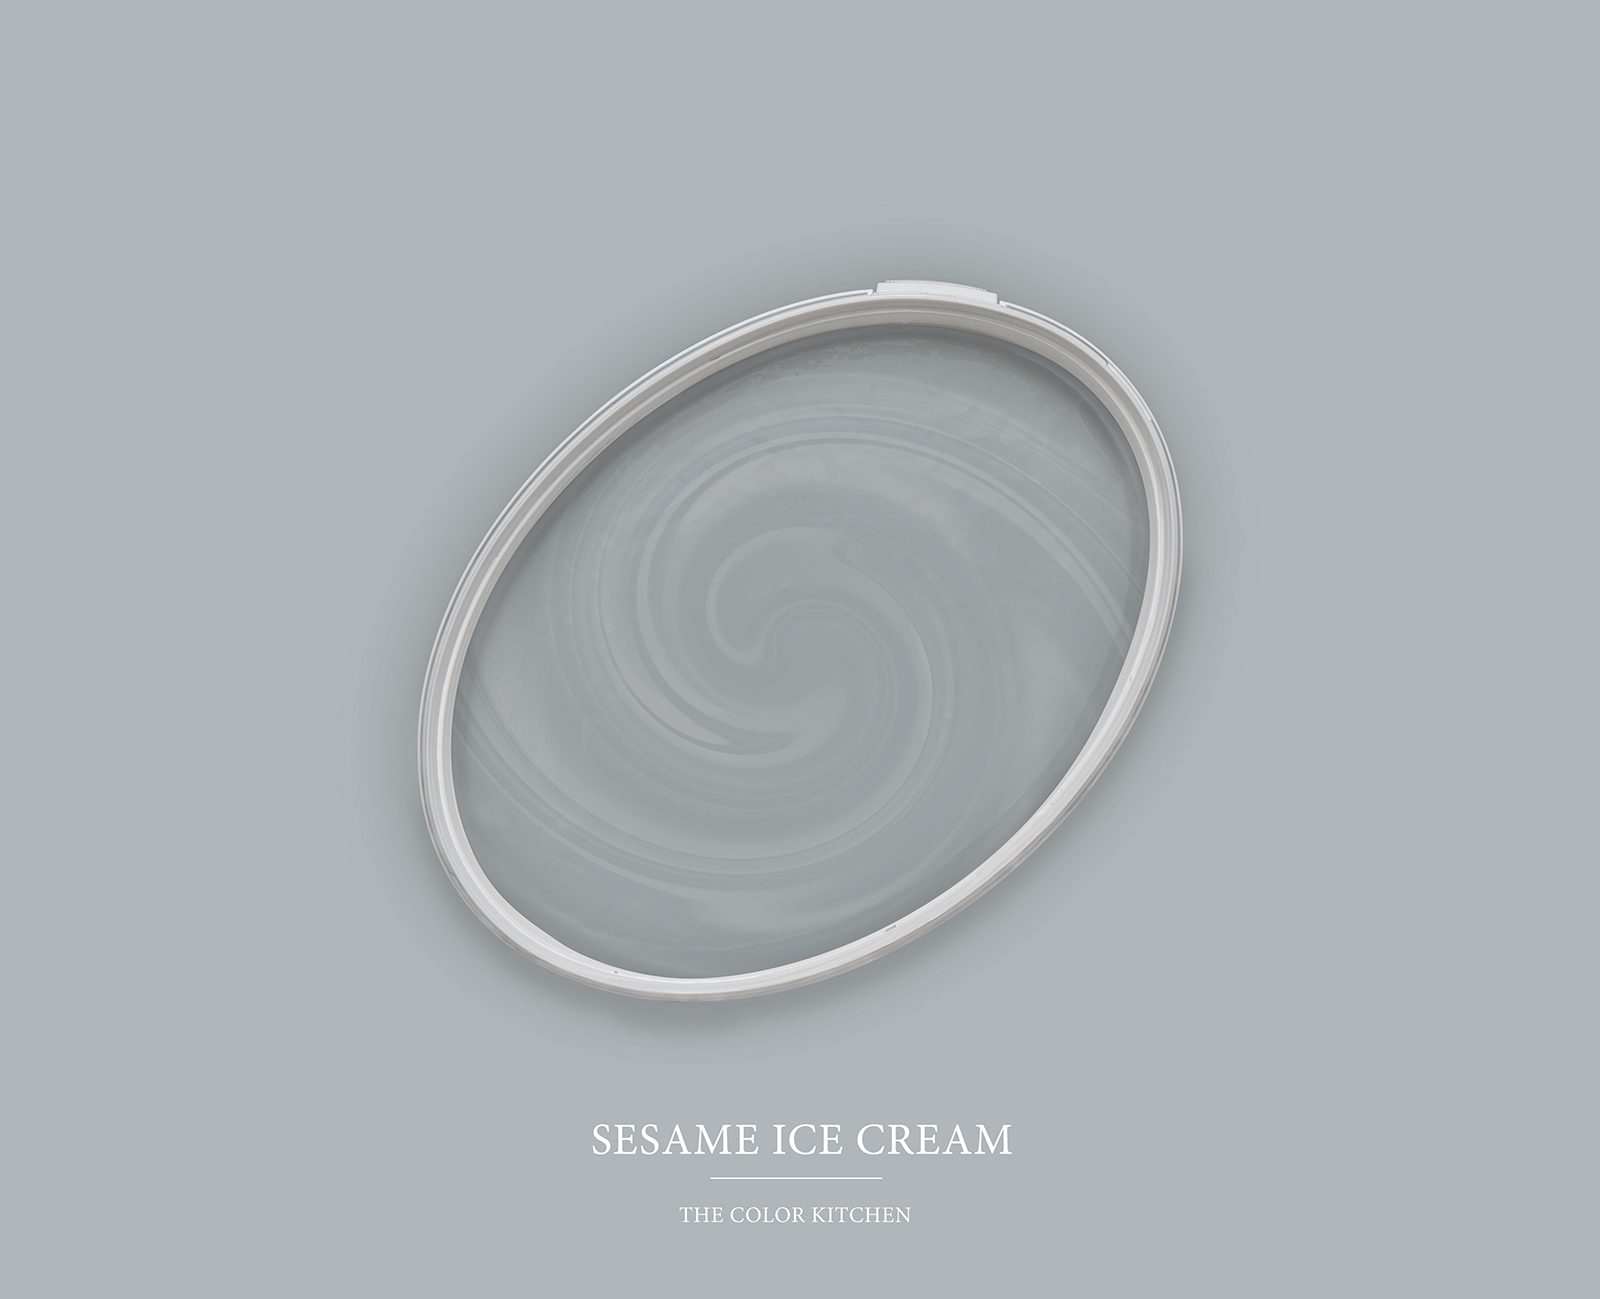         Wall Paint TCK1005 »Sesame Ice Cream« in bluish light grey – 2.5 litre
    